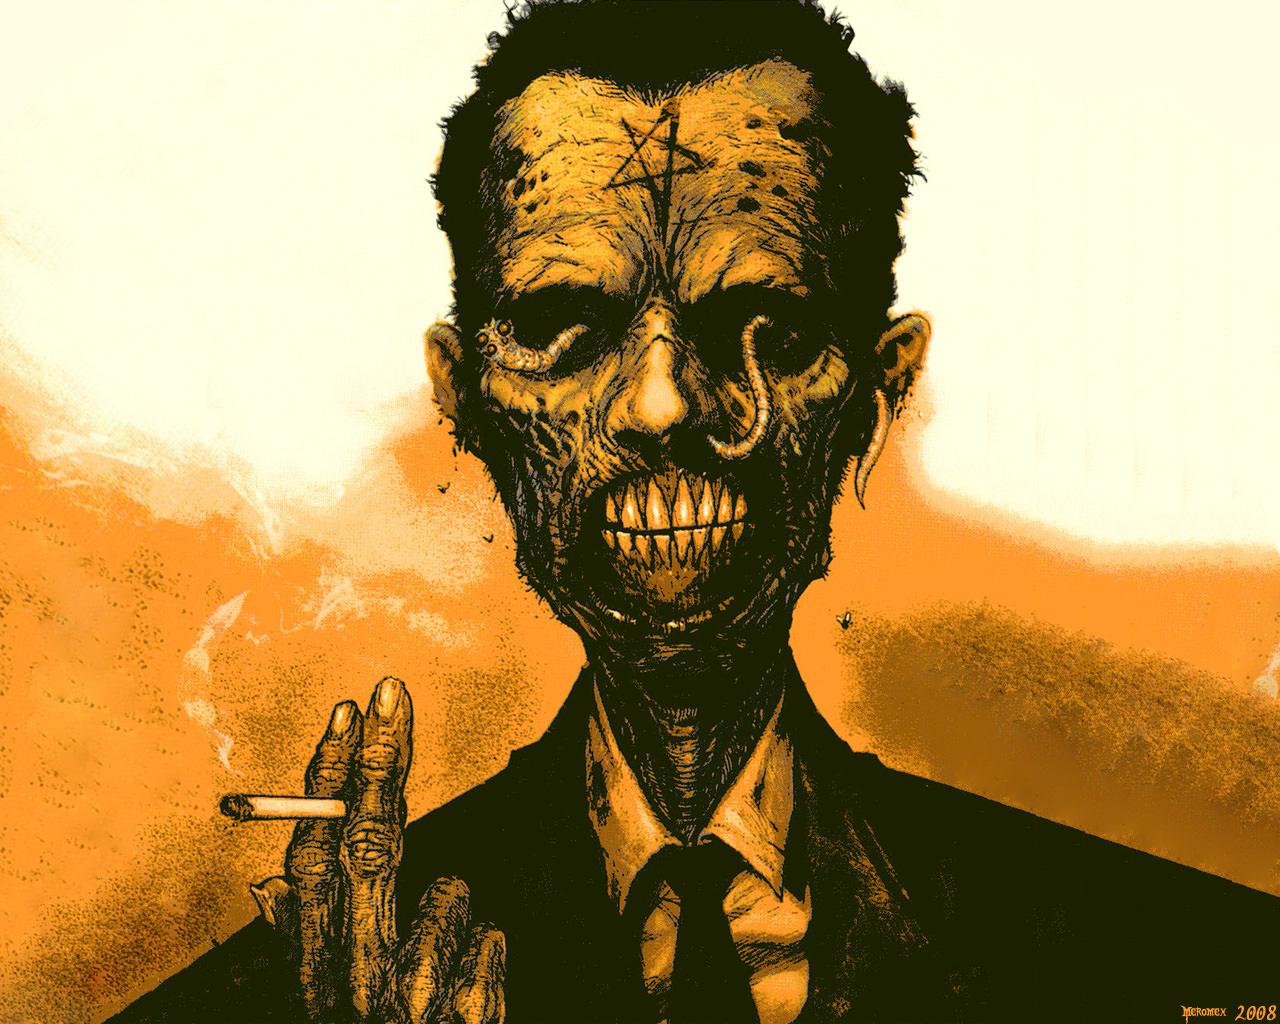 smoking zombie in suit wallpaper from Zombie wallpaper